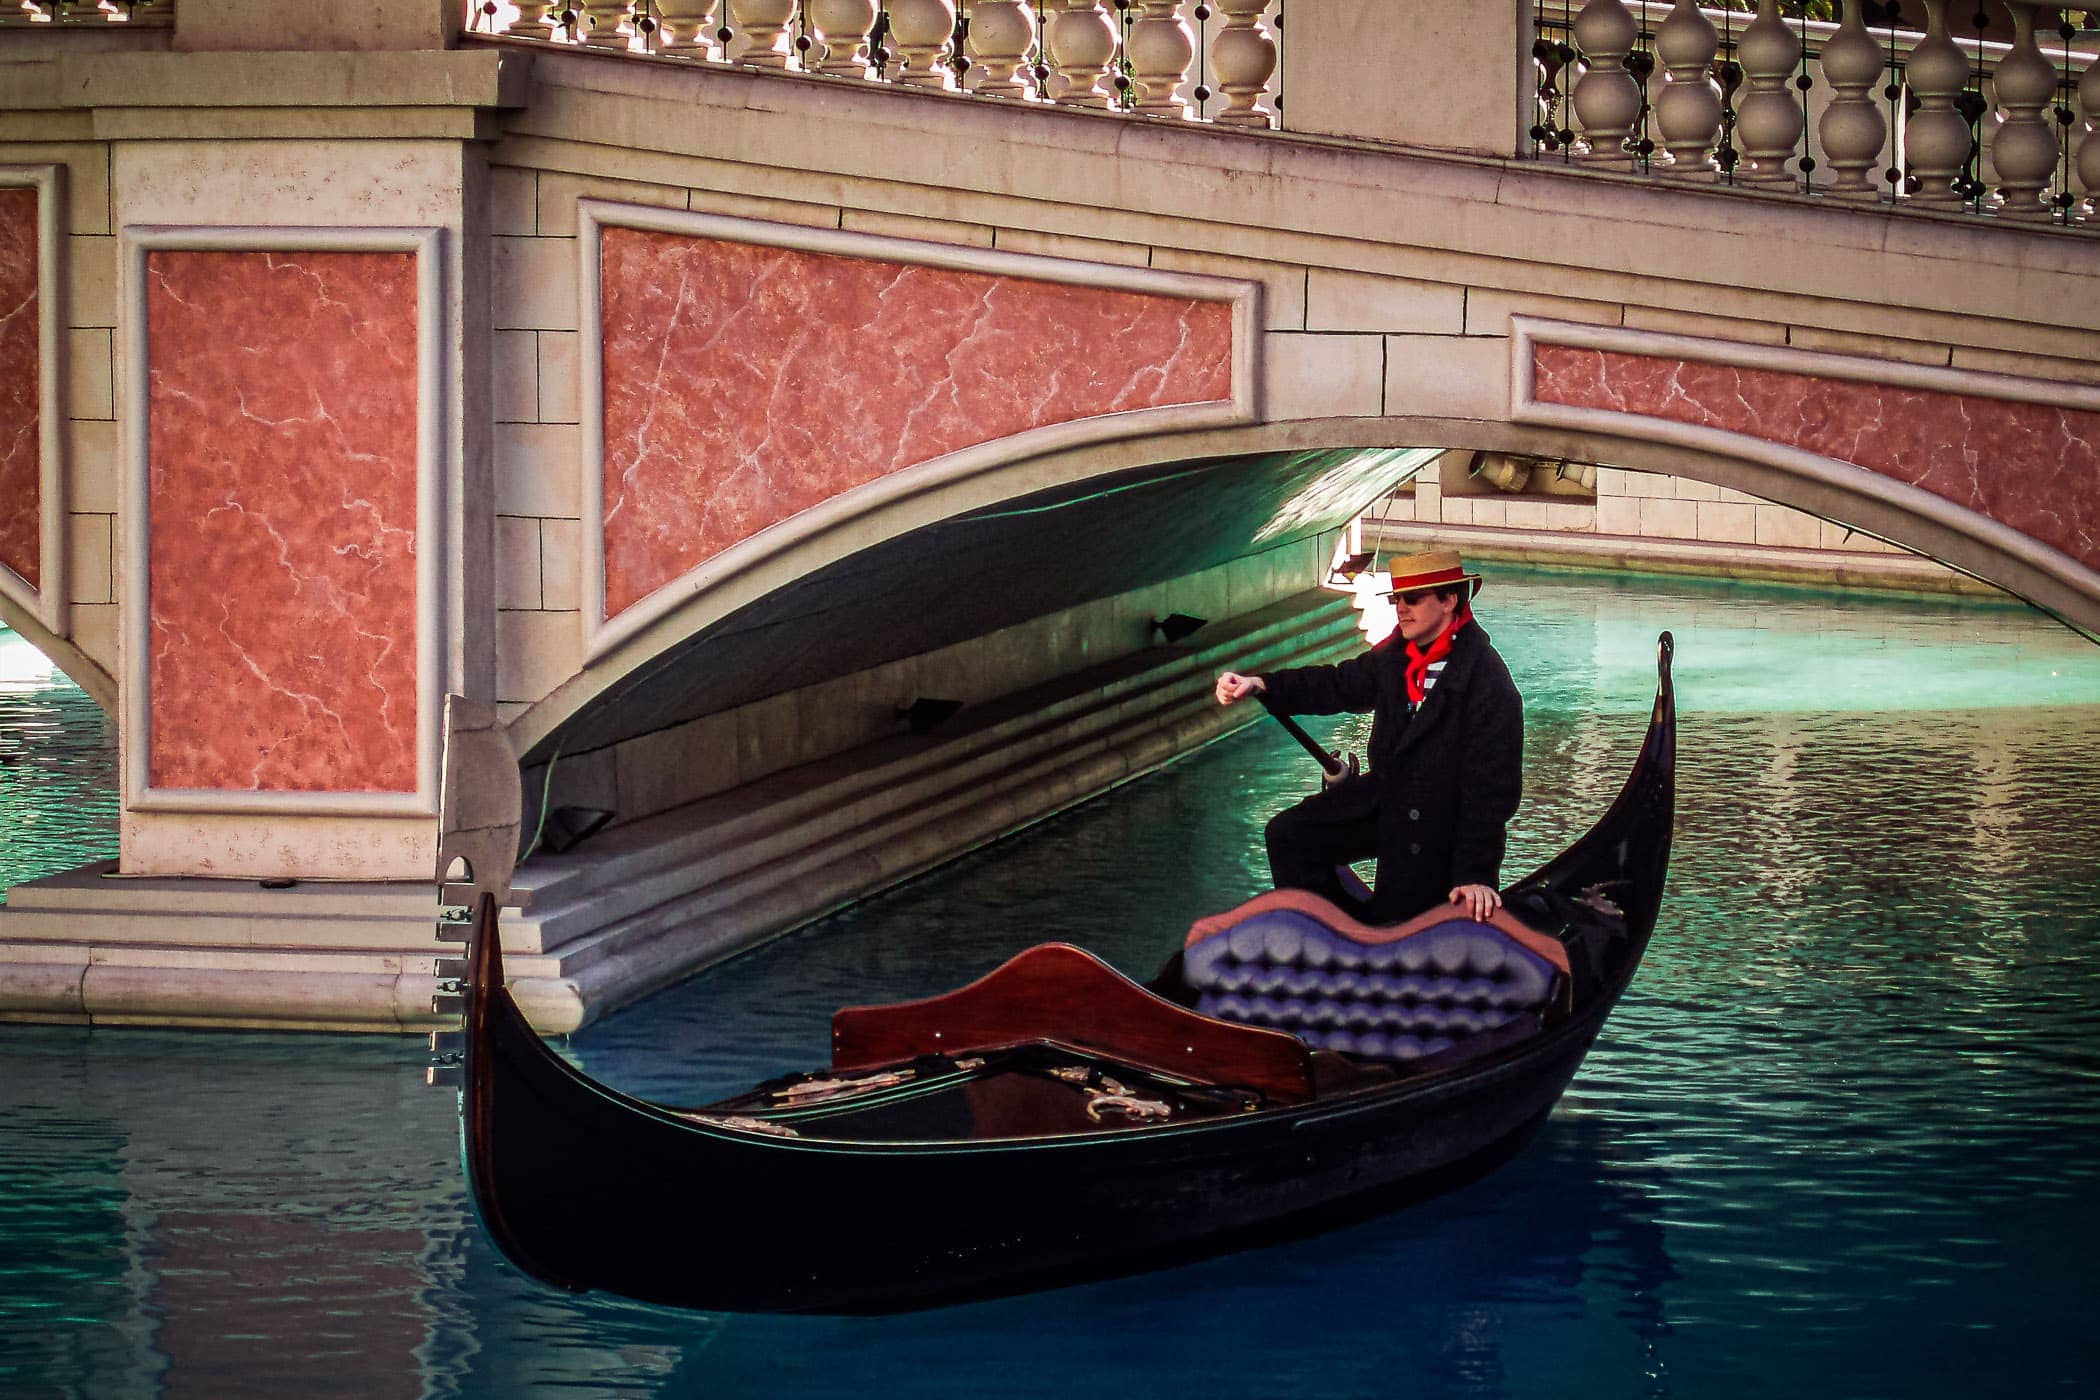 A gondolier in his gondola at The Venetian in Las Vegas.